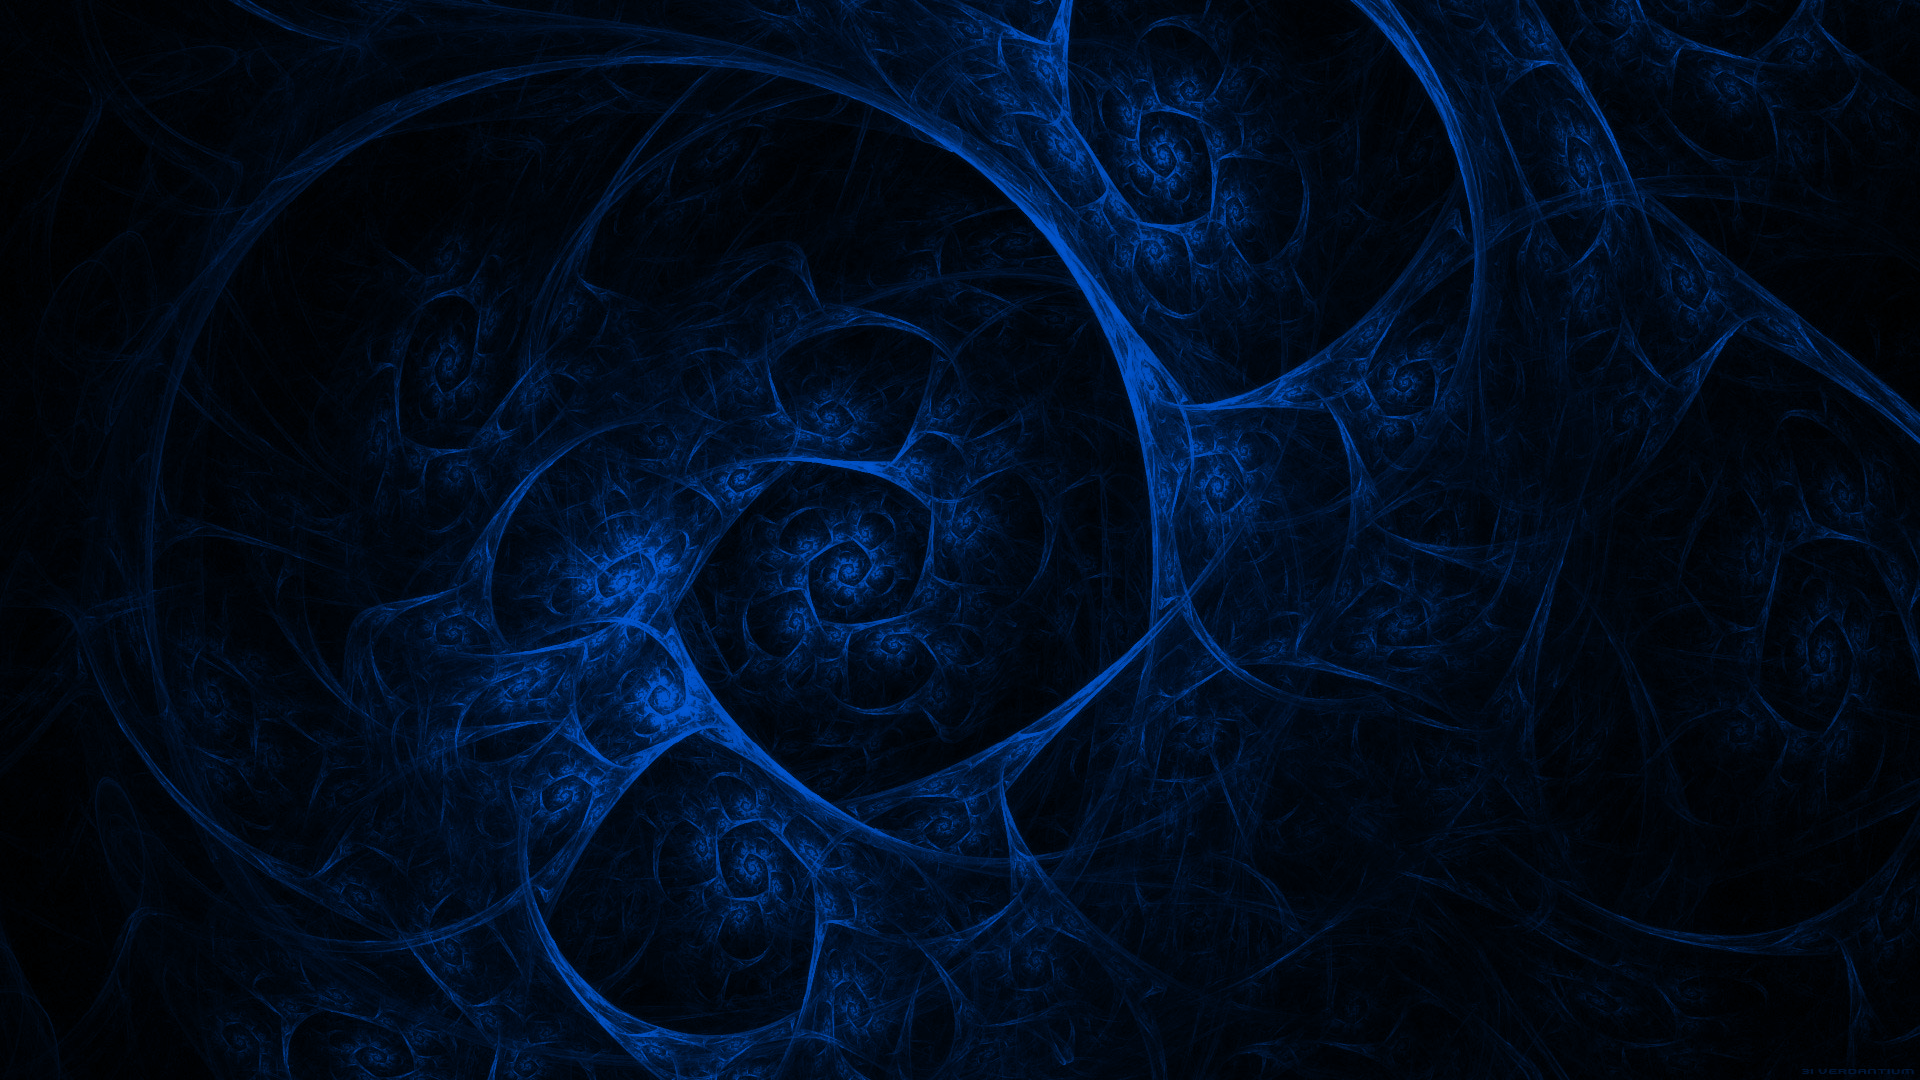 abstract, swirls - desktop wallpaper